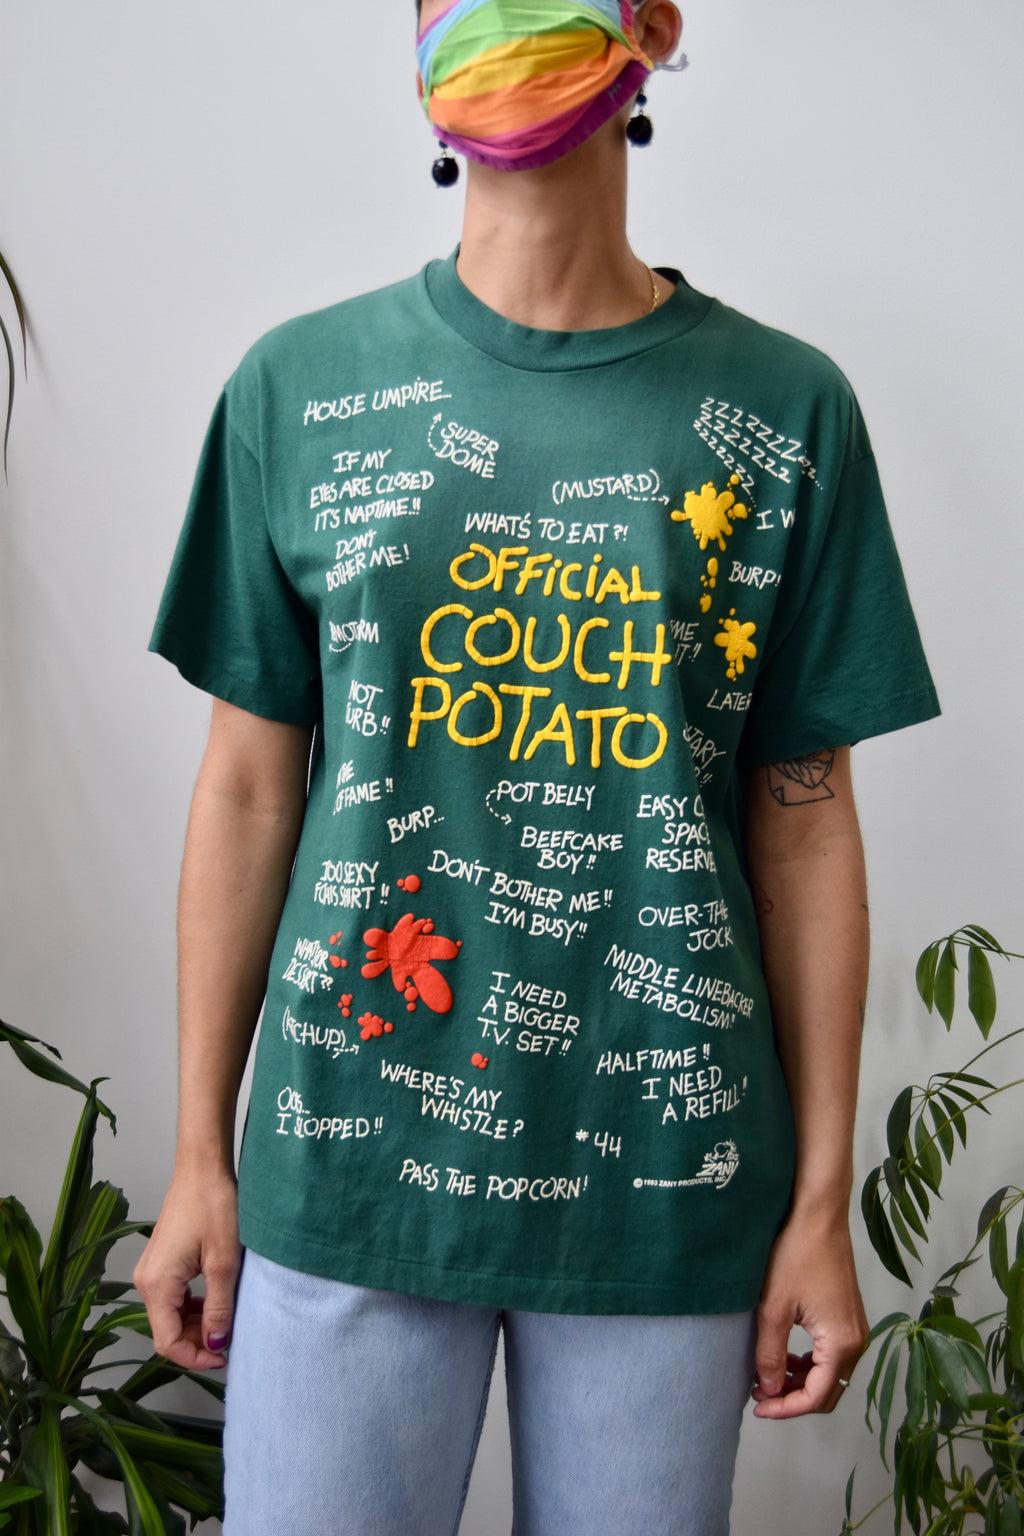 Couch Potato T-Shirt